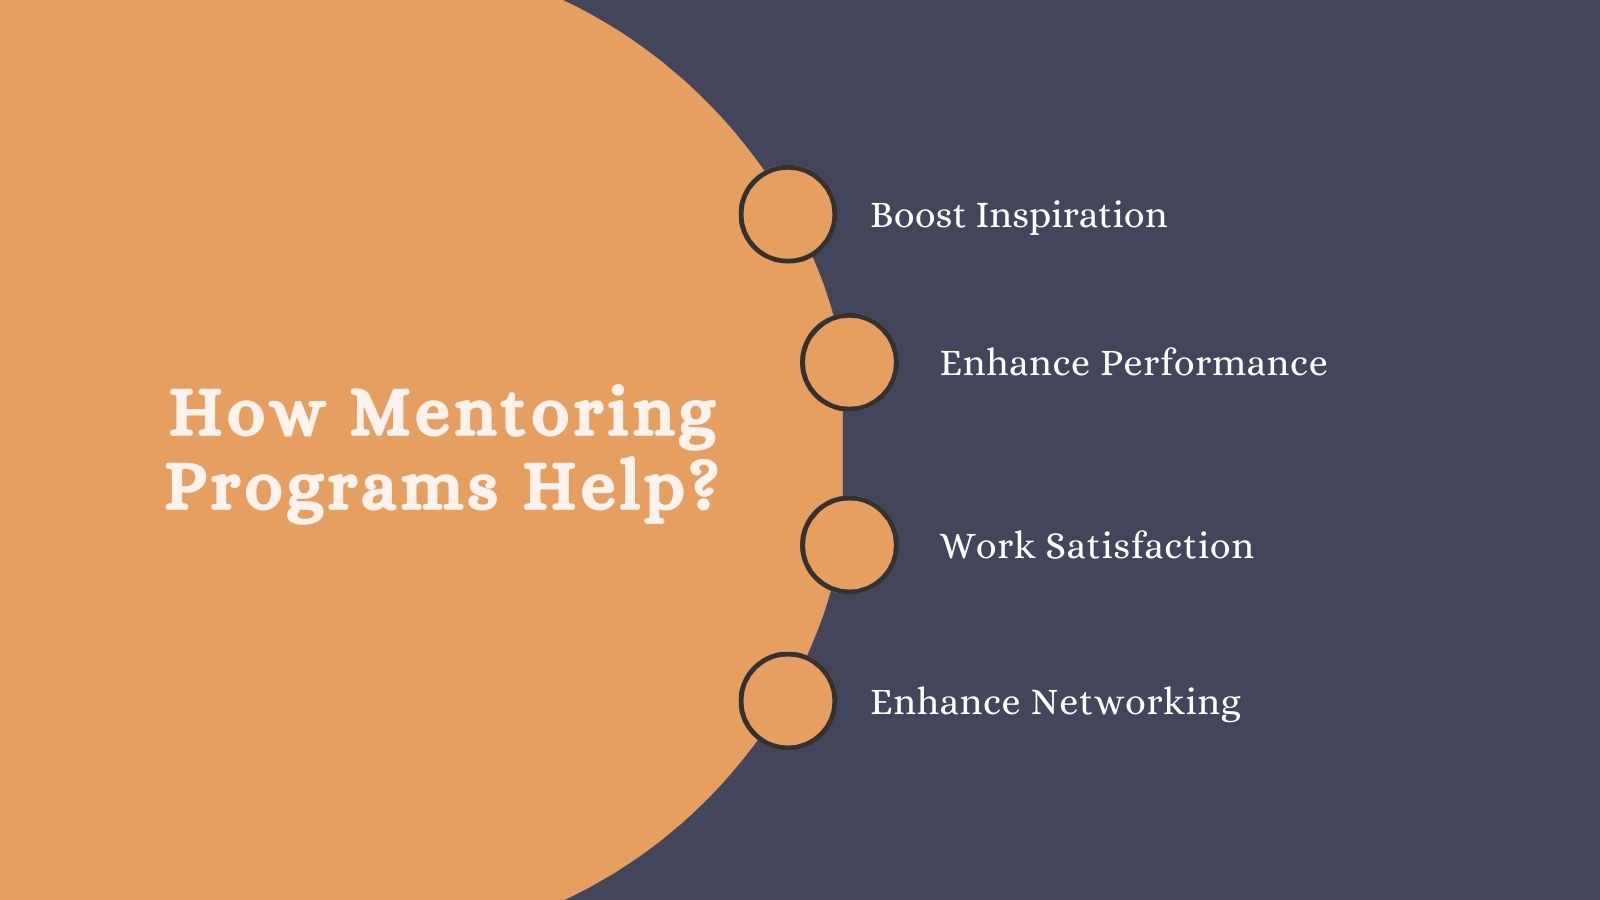 Benefits of mentoring